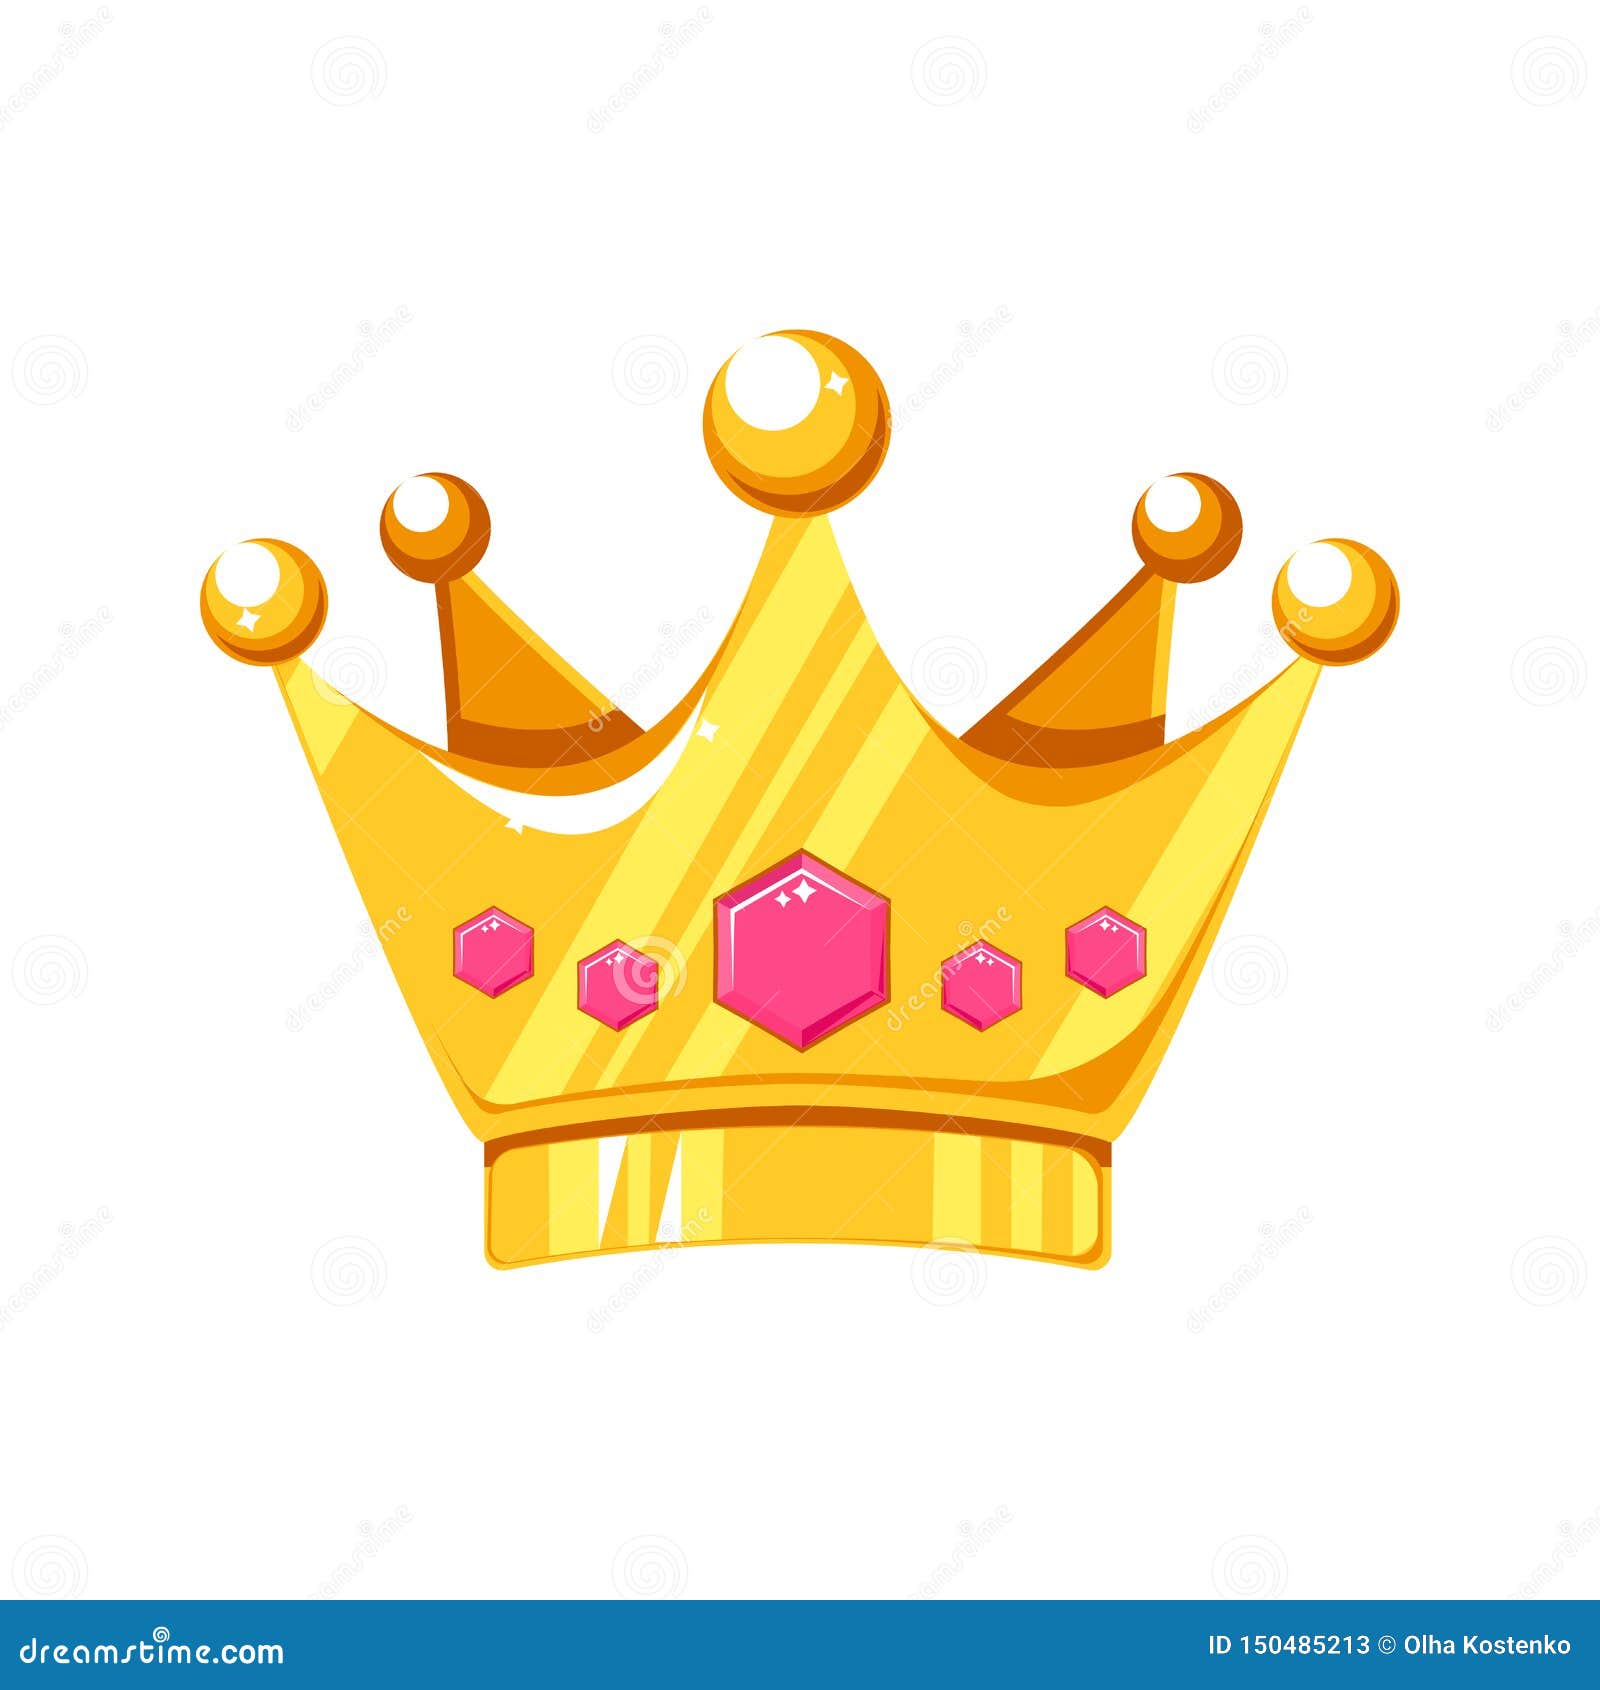 Cartoon Crown with Precious Stones Stock Vector - Illustration of insignia,  monarchy: 150485213